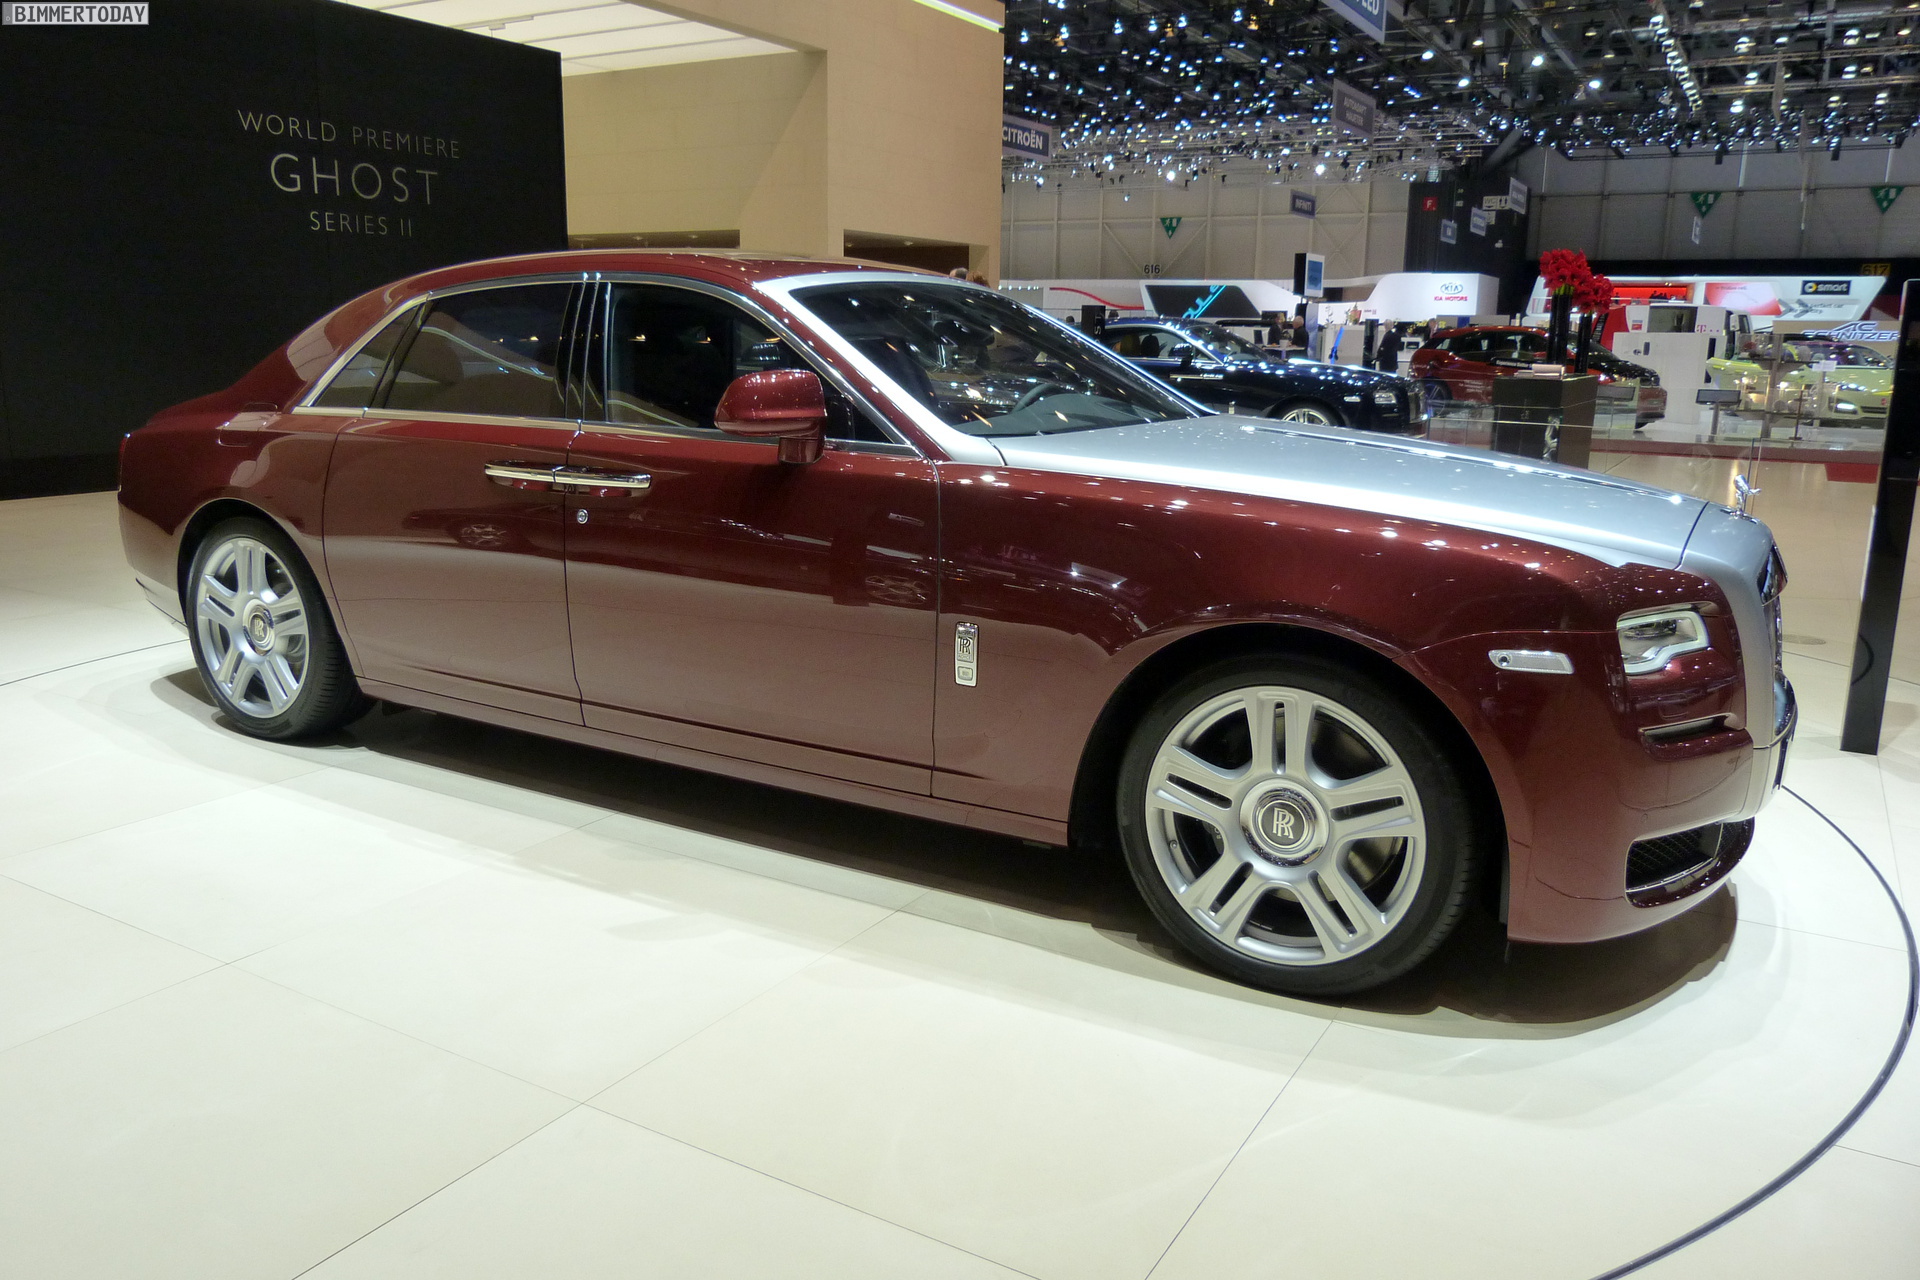 Rolls Royce Ghost II Series Exteriors